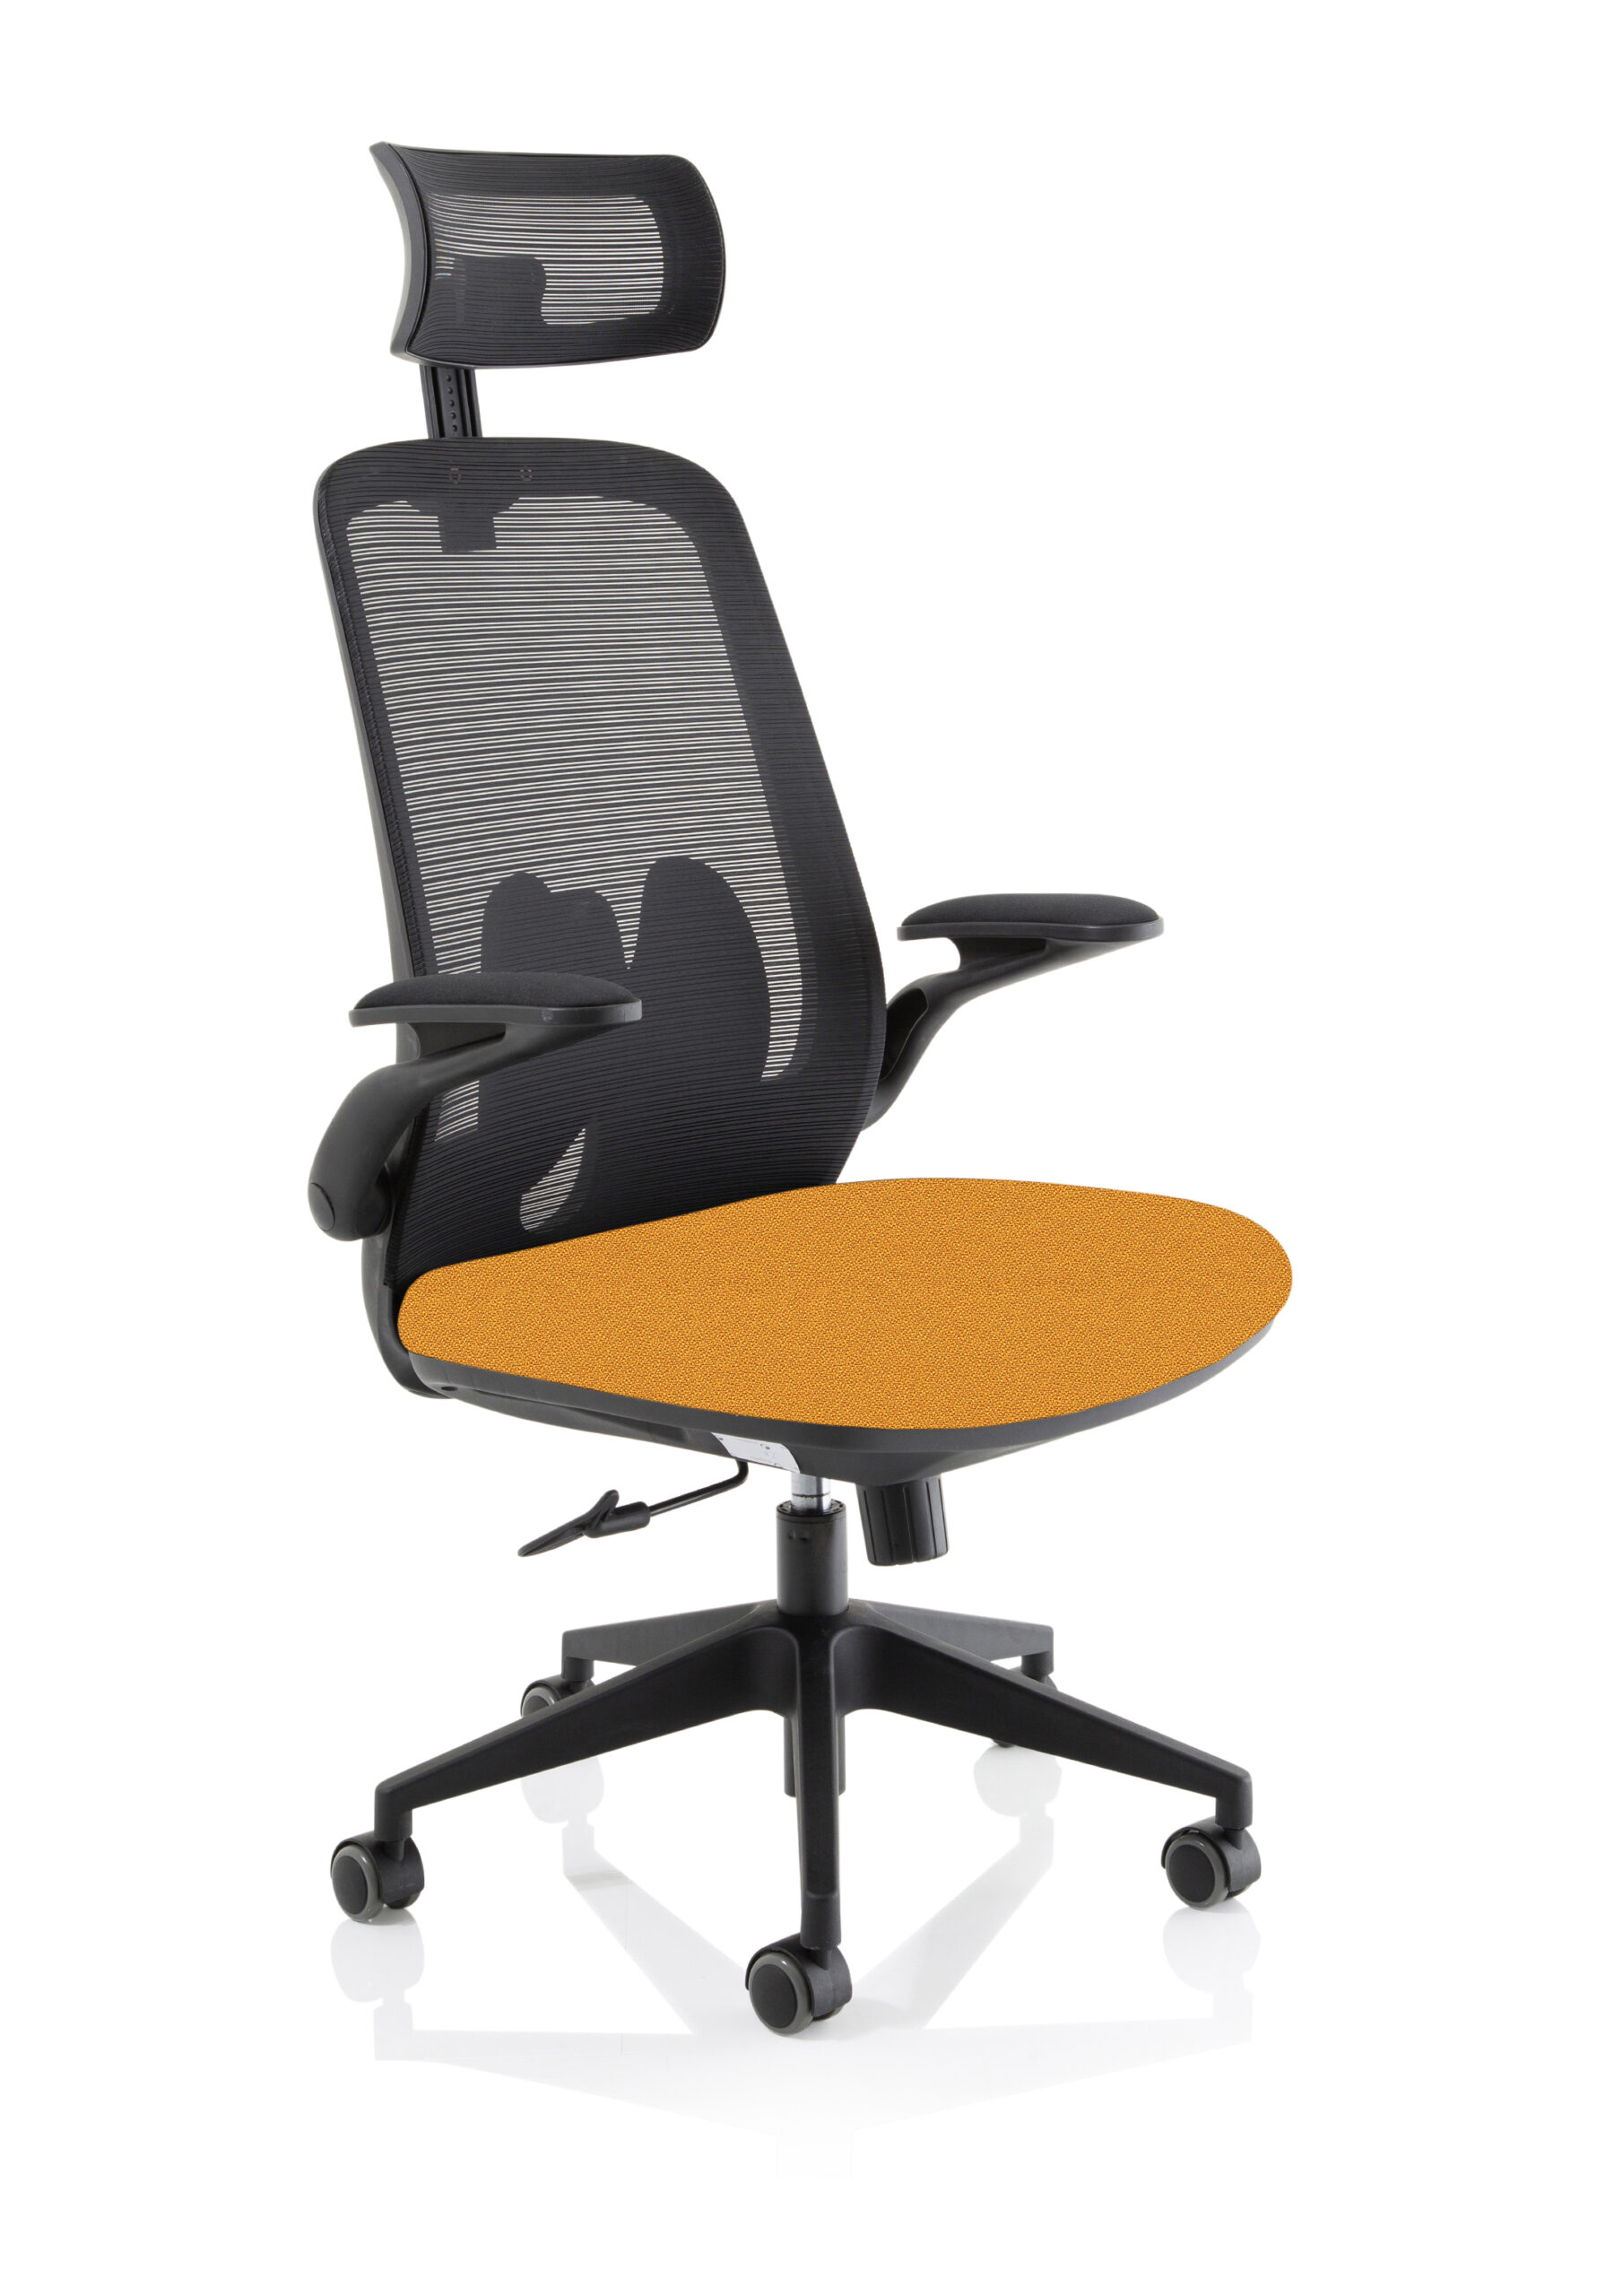 Lasino Executive Bespoke Fabric Seat Senna Yellow Mesh Chair With Folding Arms